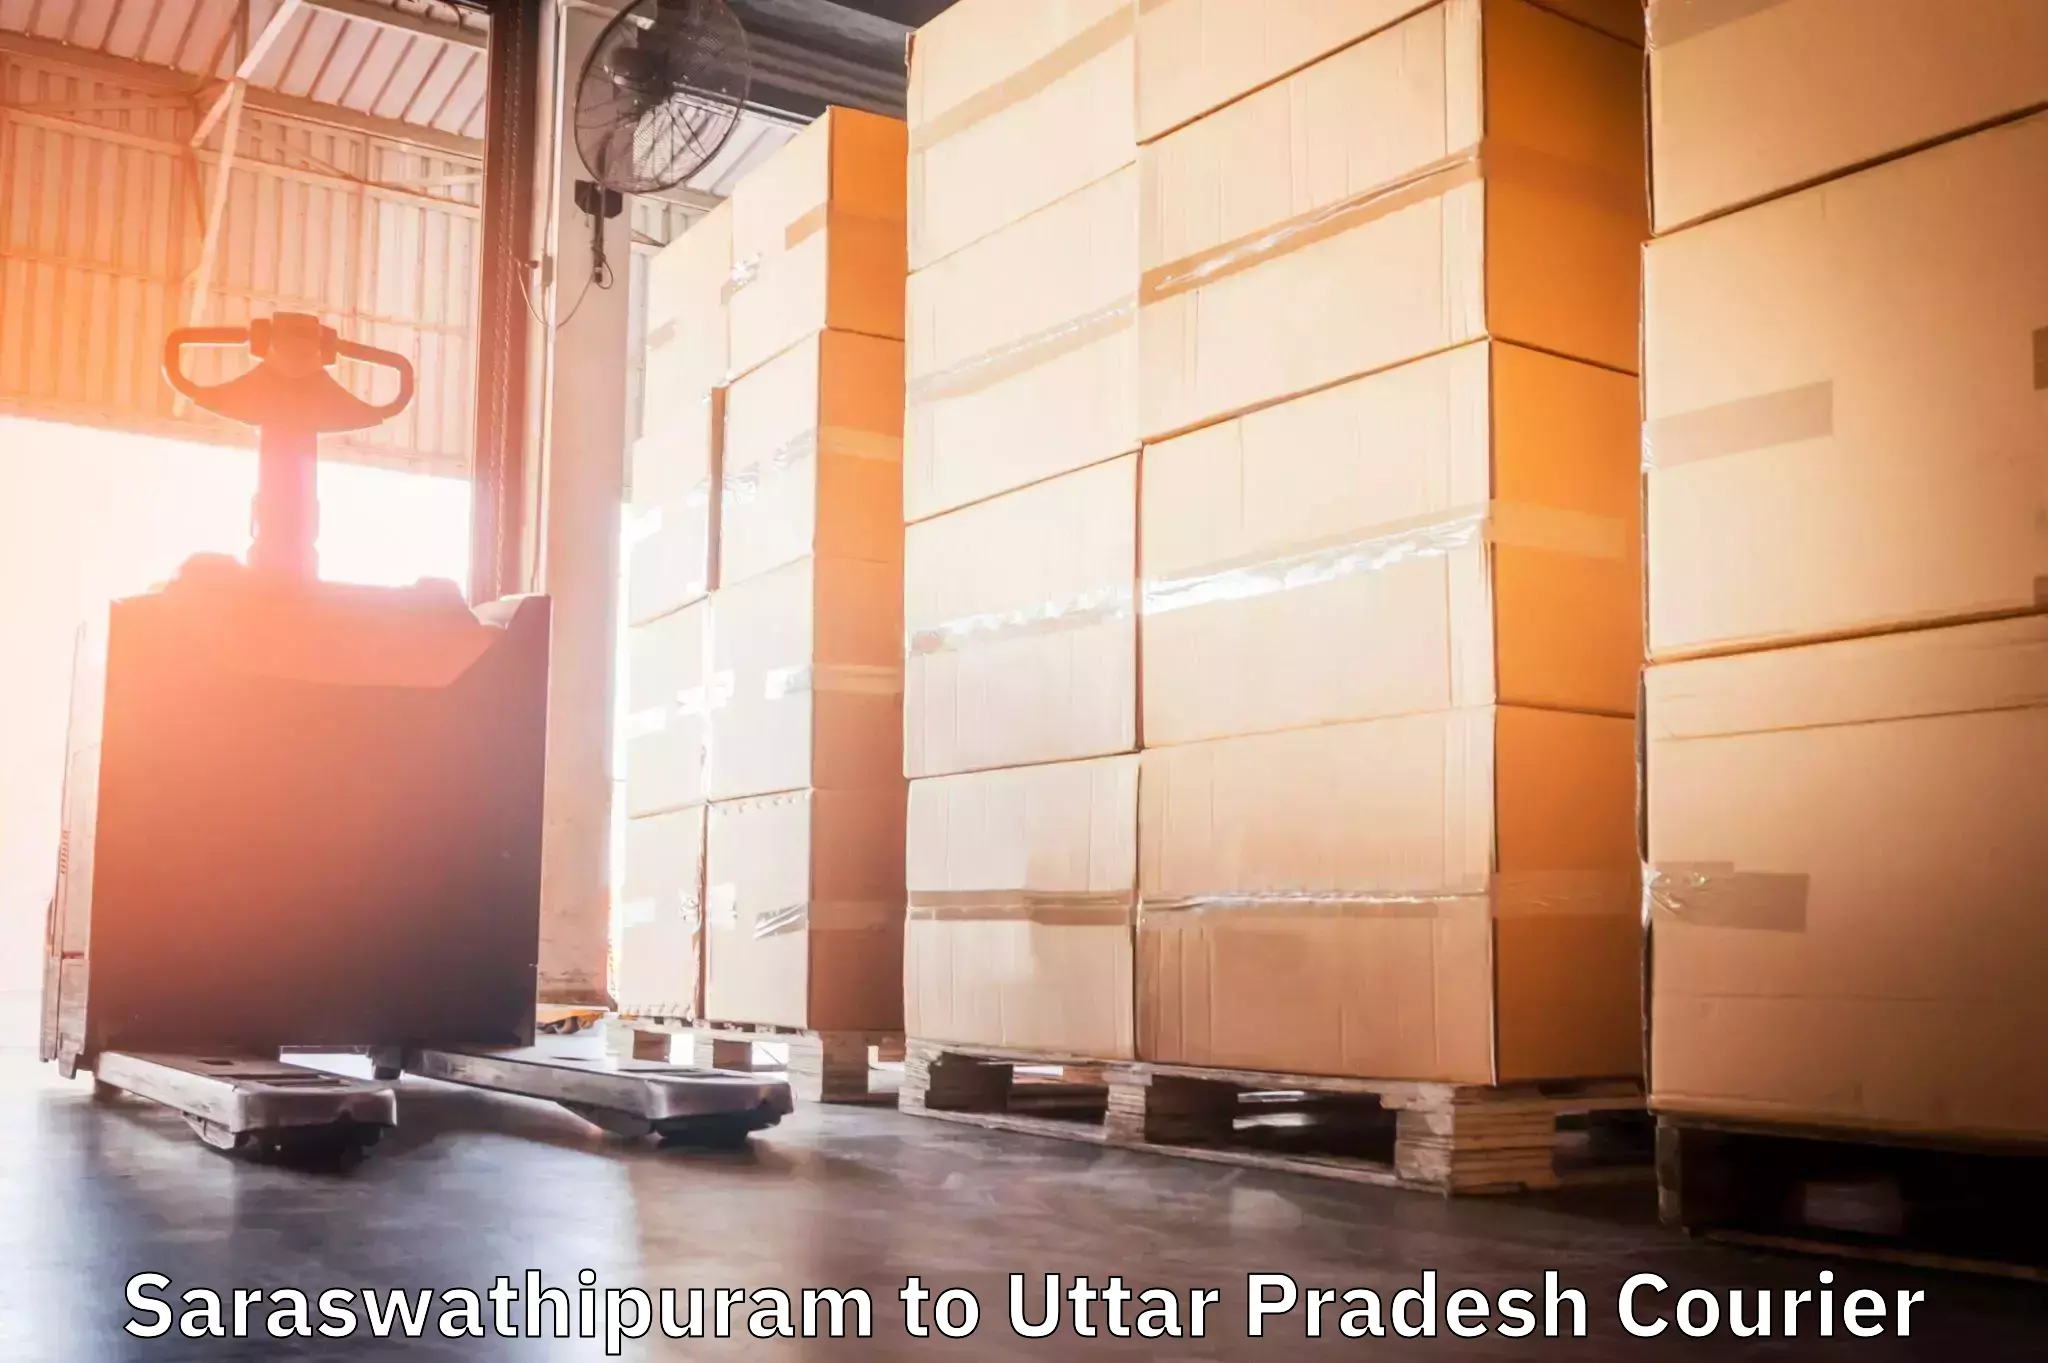 Sustainable courier practices in Saraswathipuram to Uttar Pradesh